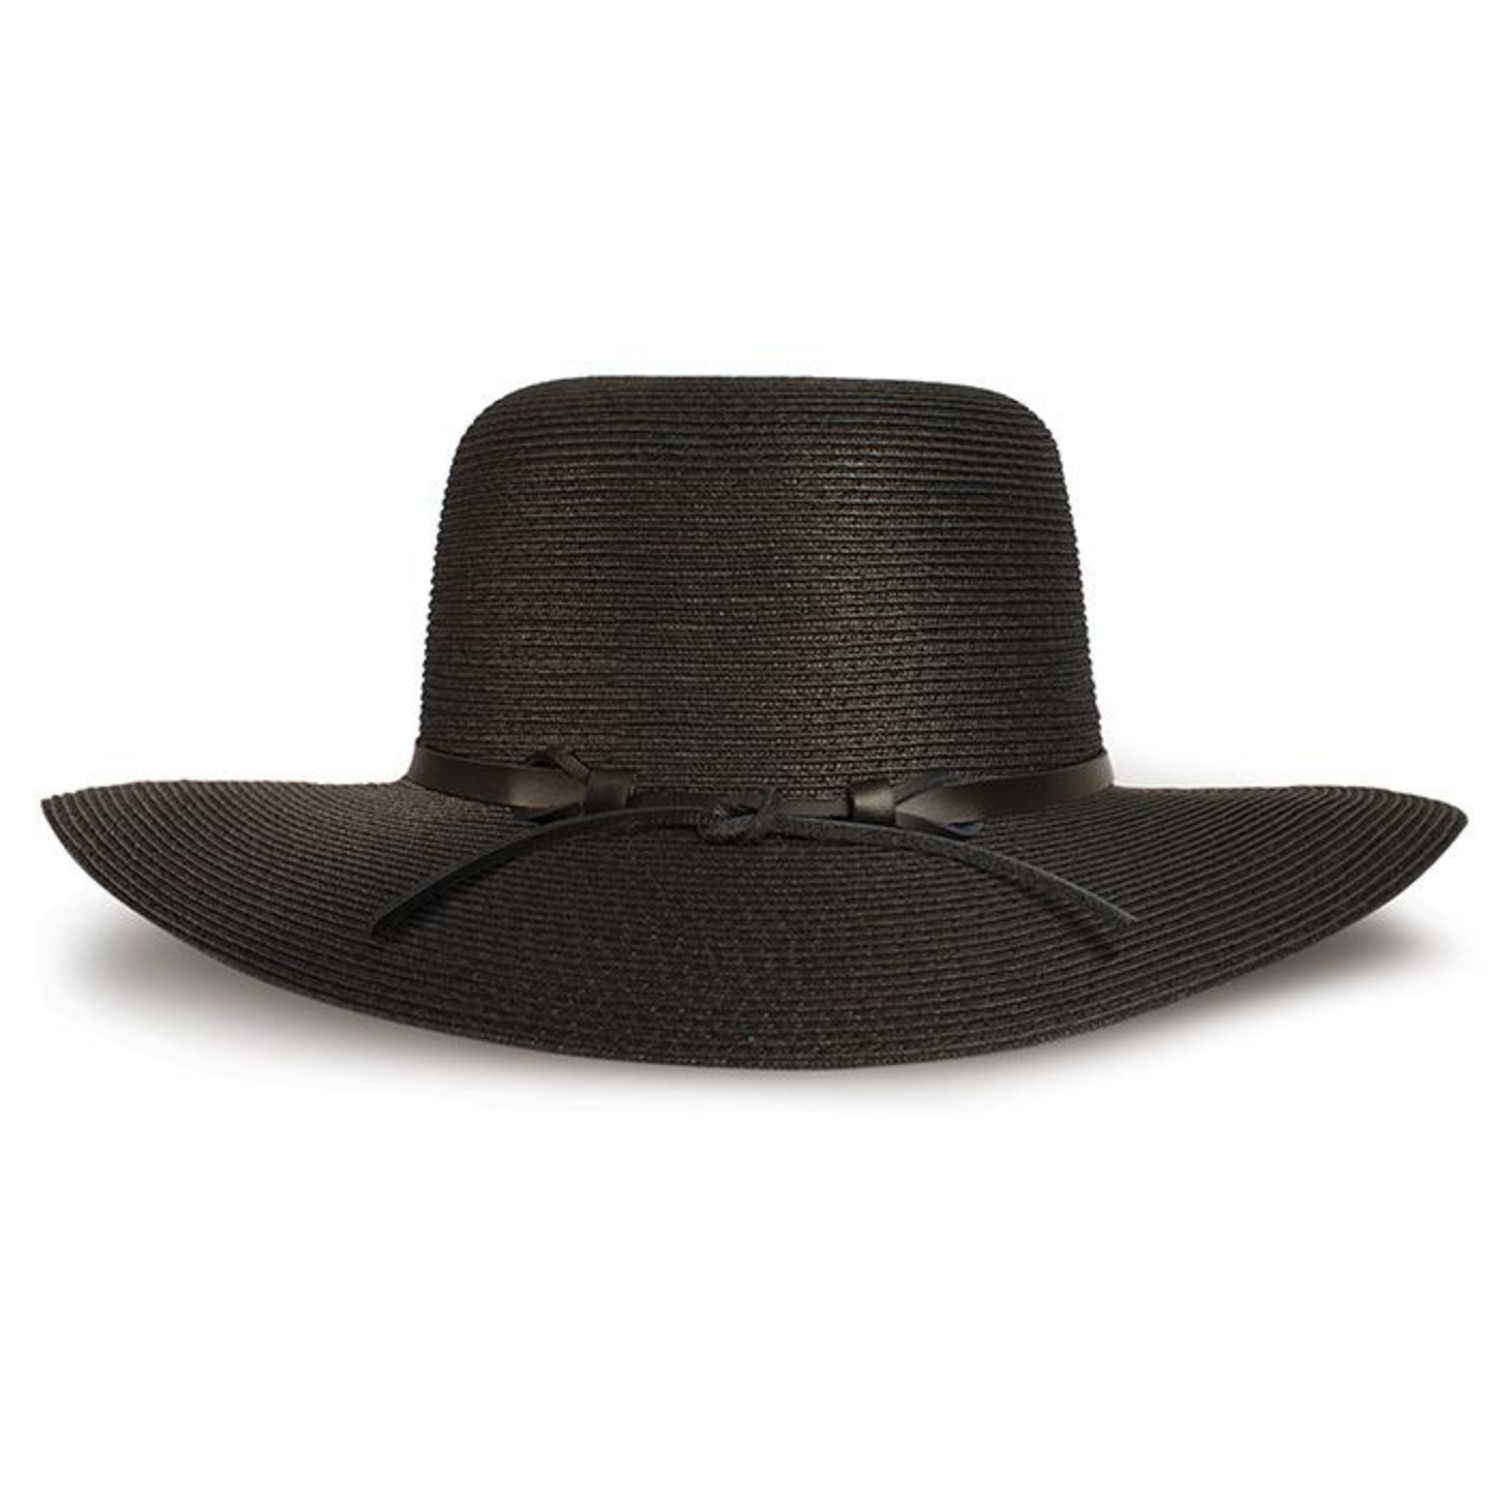 Buy HDE Women's Floppy Packable Wide Brim Sun Shade Derby Beach Straw Hat  (Black) at